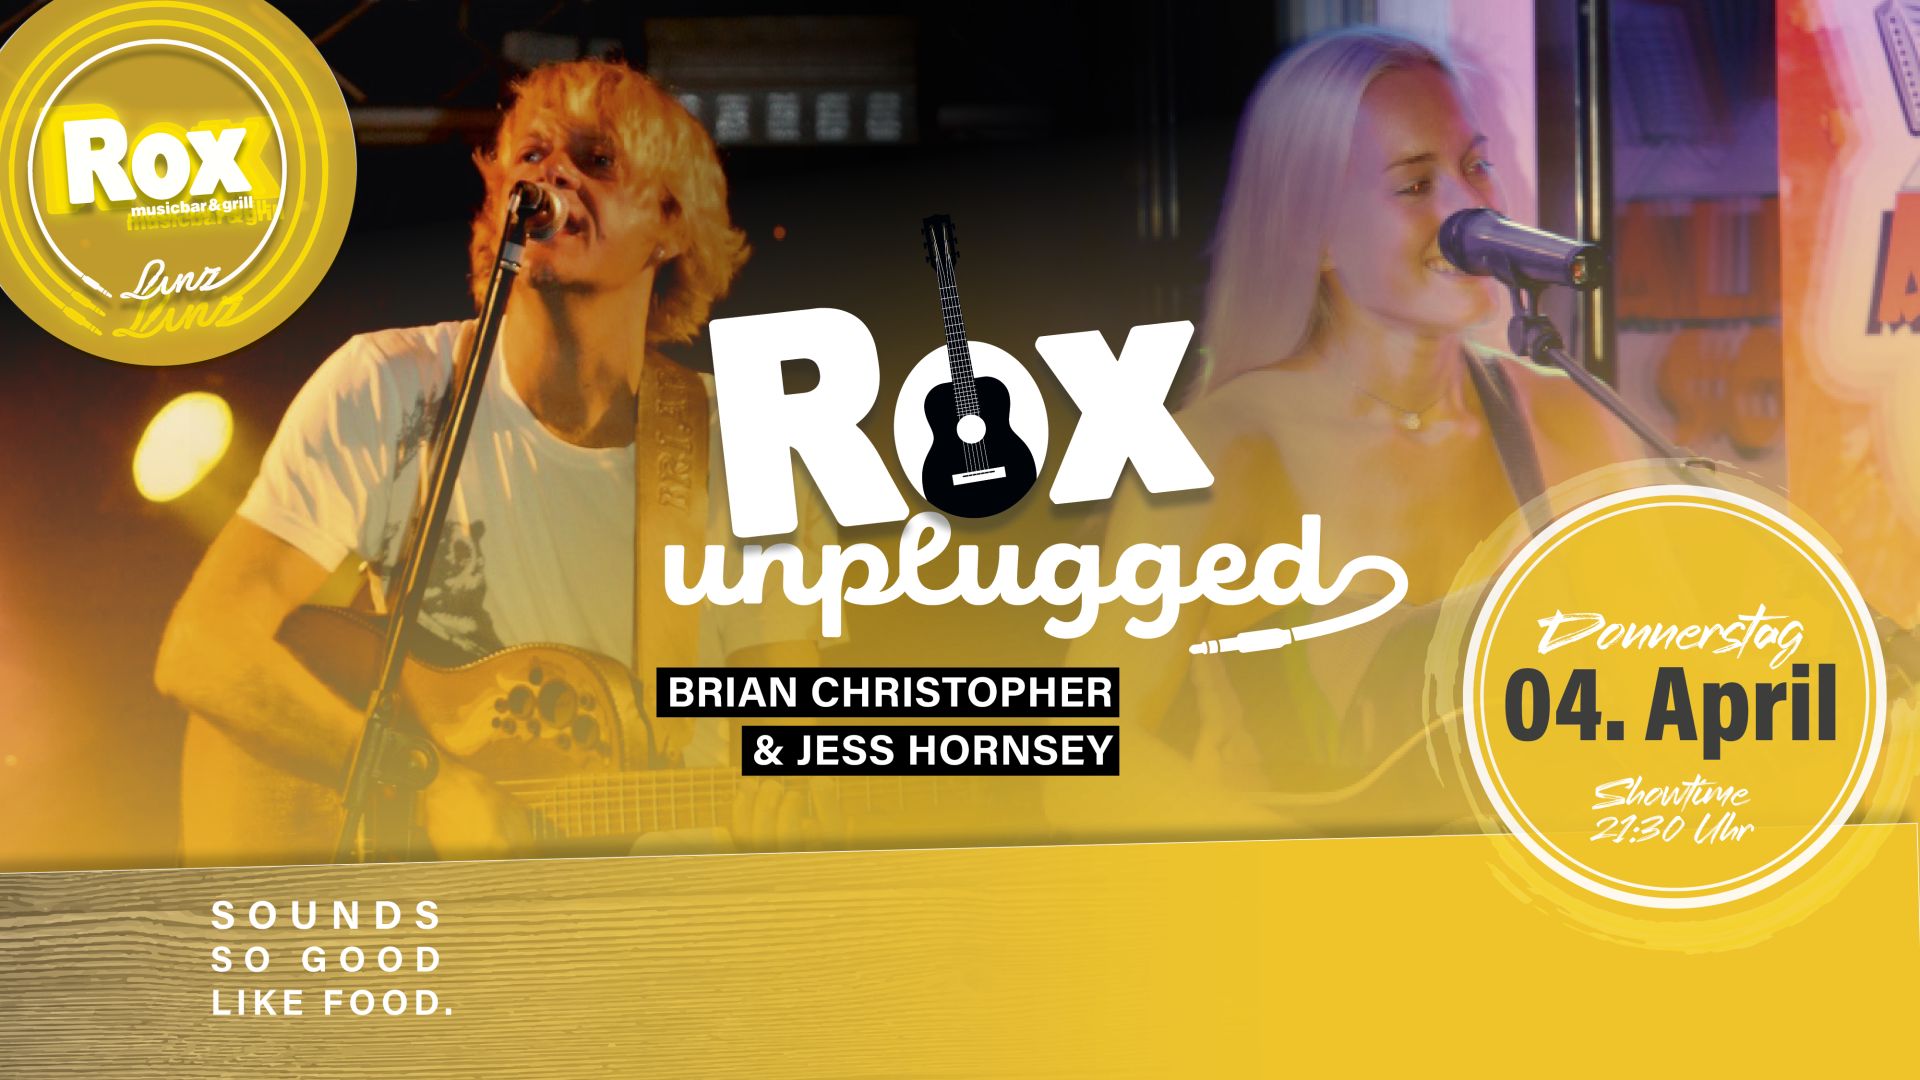 Rox unplugged - Brian Christopher & Jess Hornsey | Do 04.04.